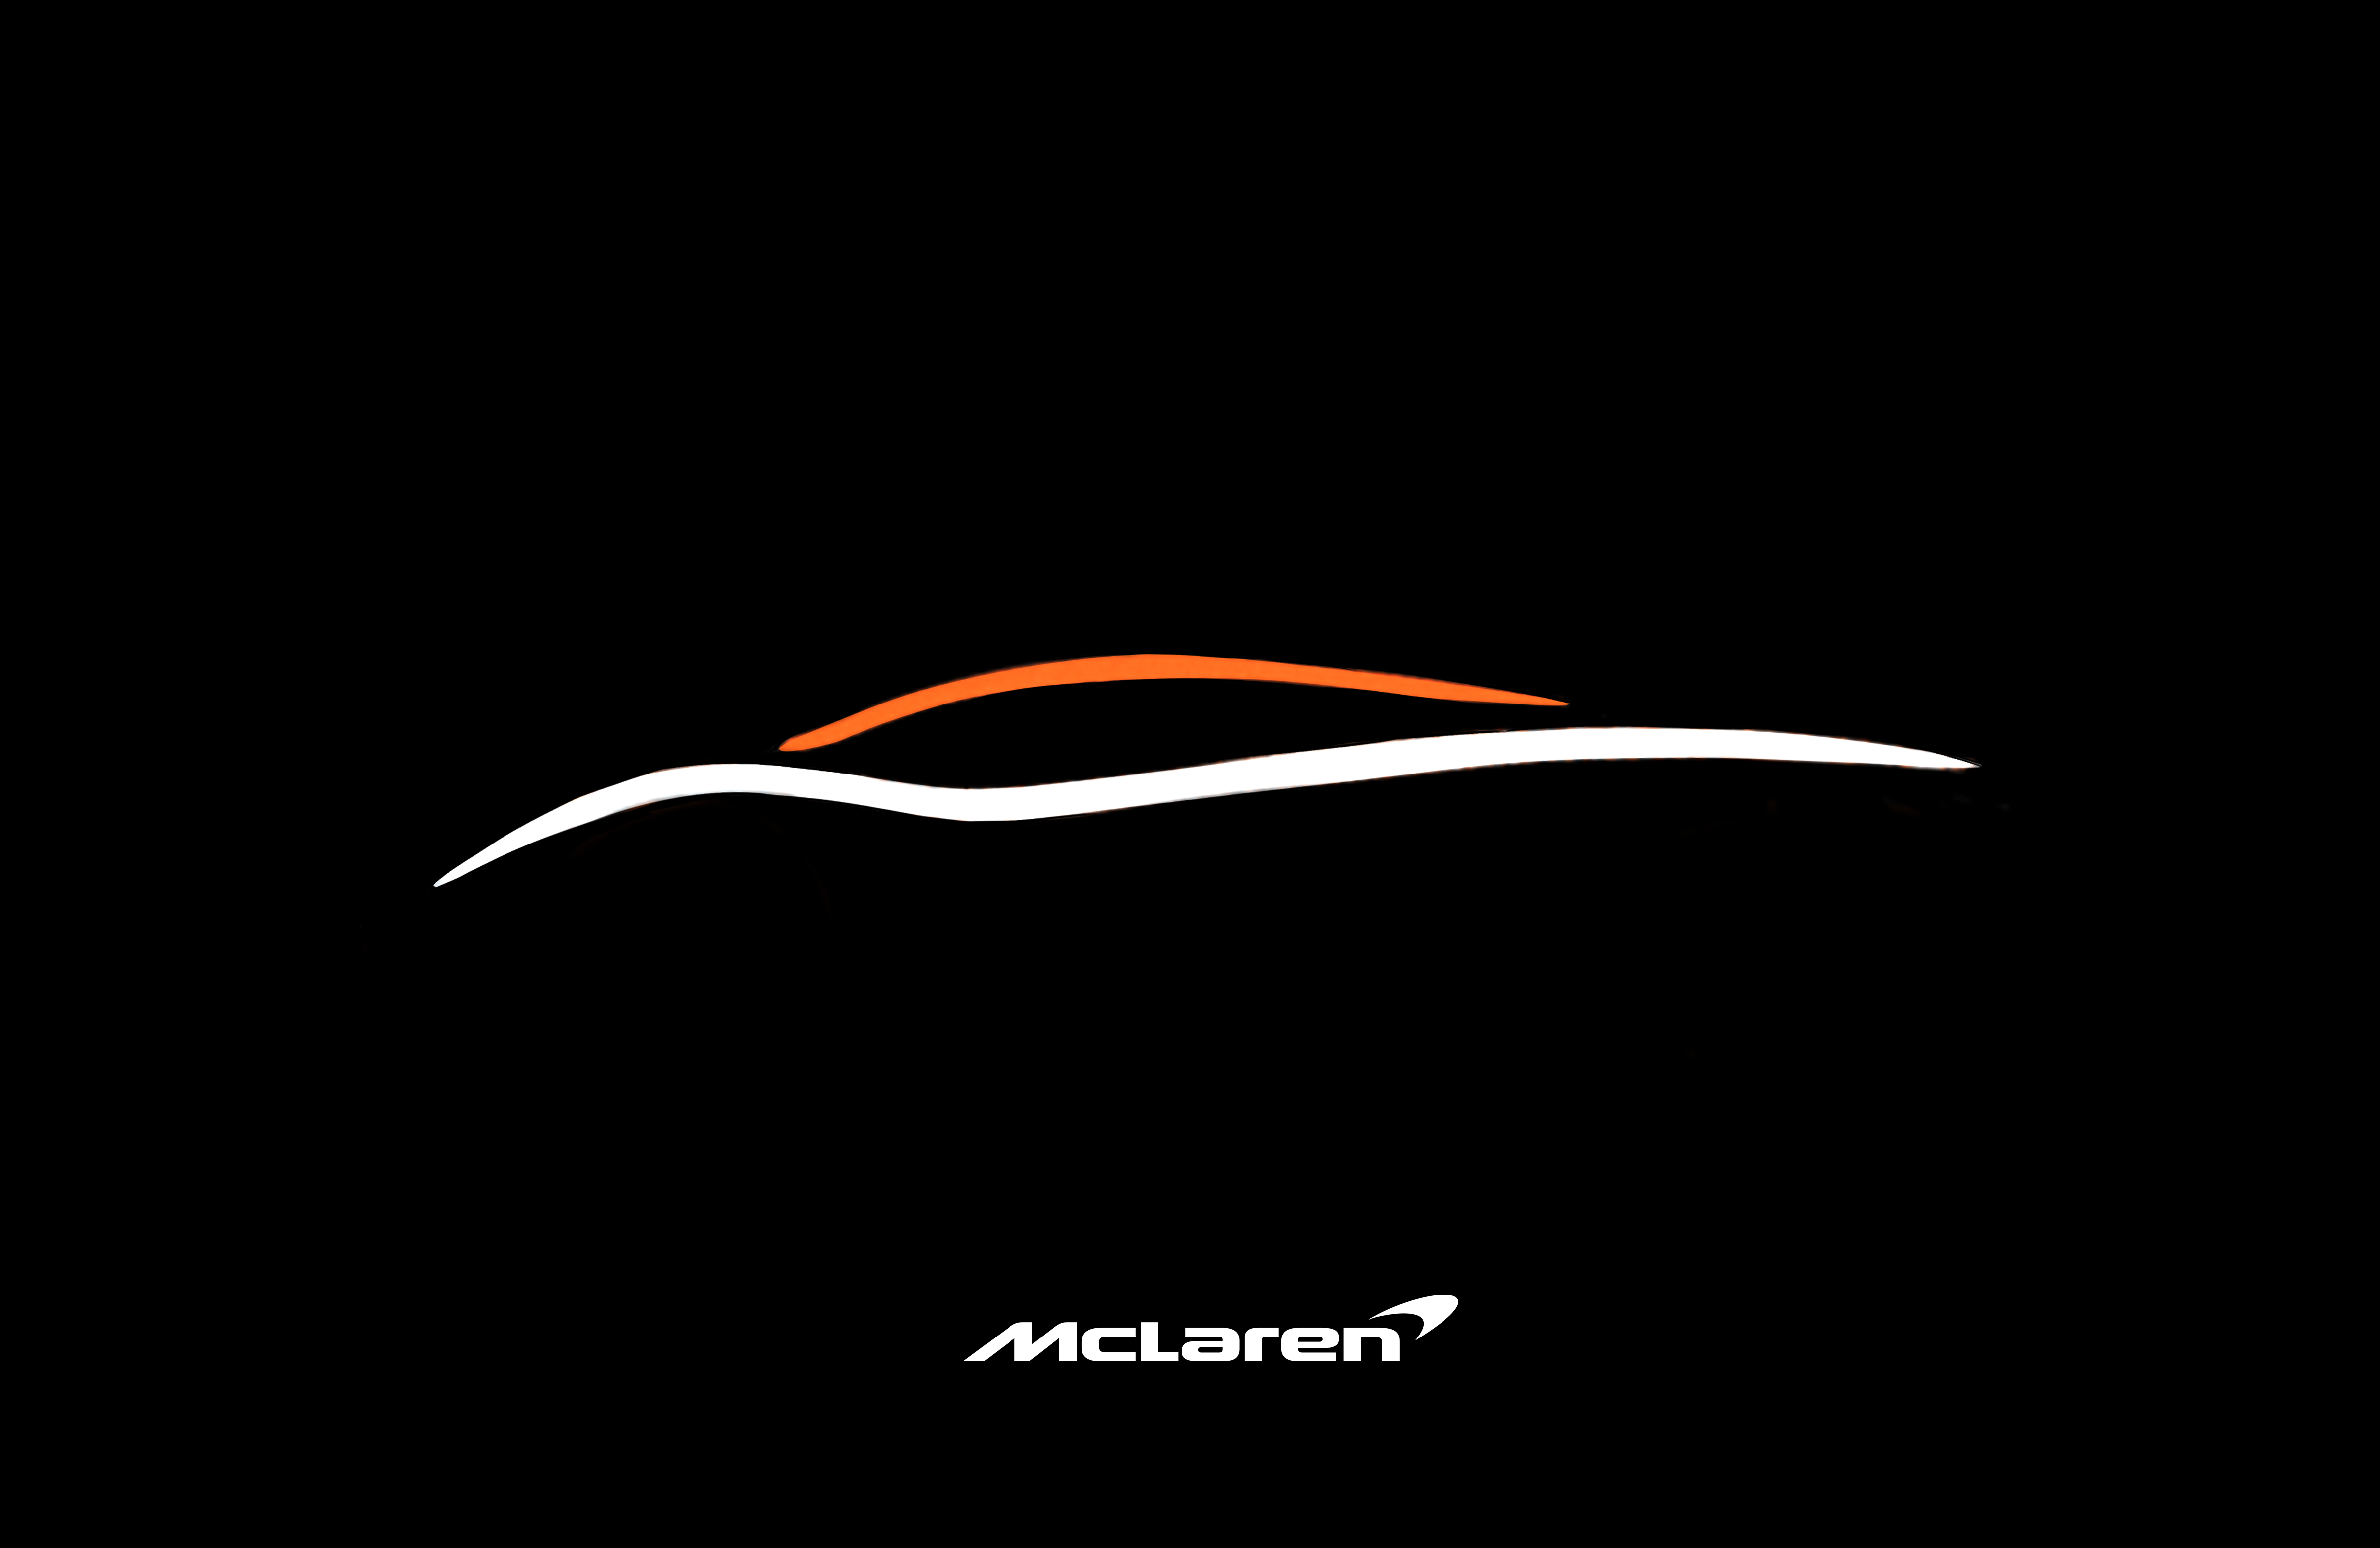 McLaren shares glimpse of its future road car concept – Gamereactor